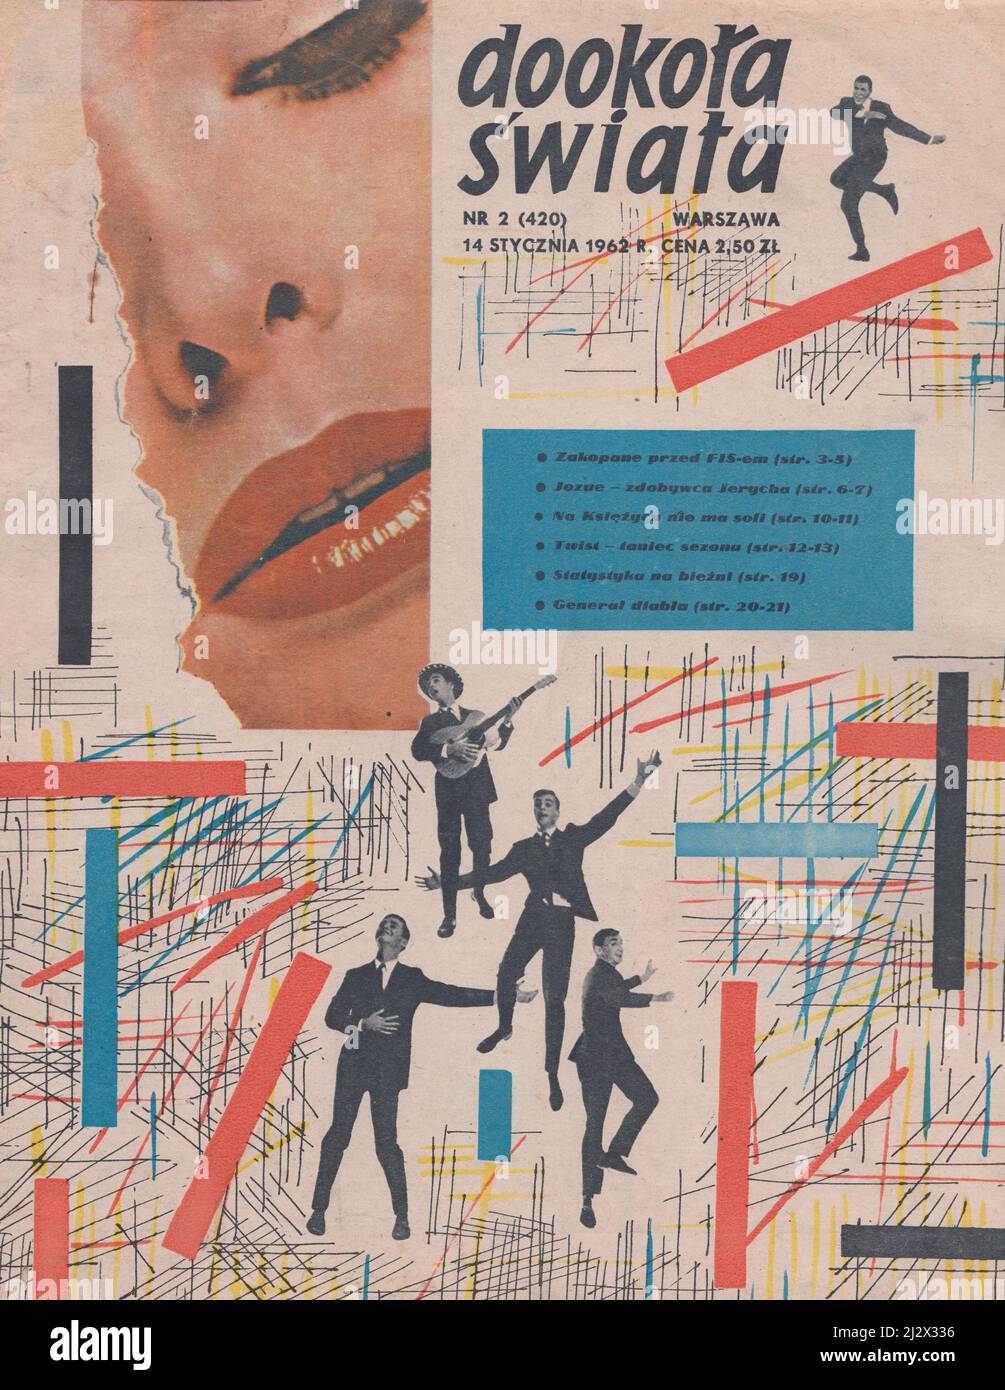 Dookola swiata okladka pierwsza strona czasopismo polskie front cover of polish magazine around the world 1962 Stock Photo